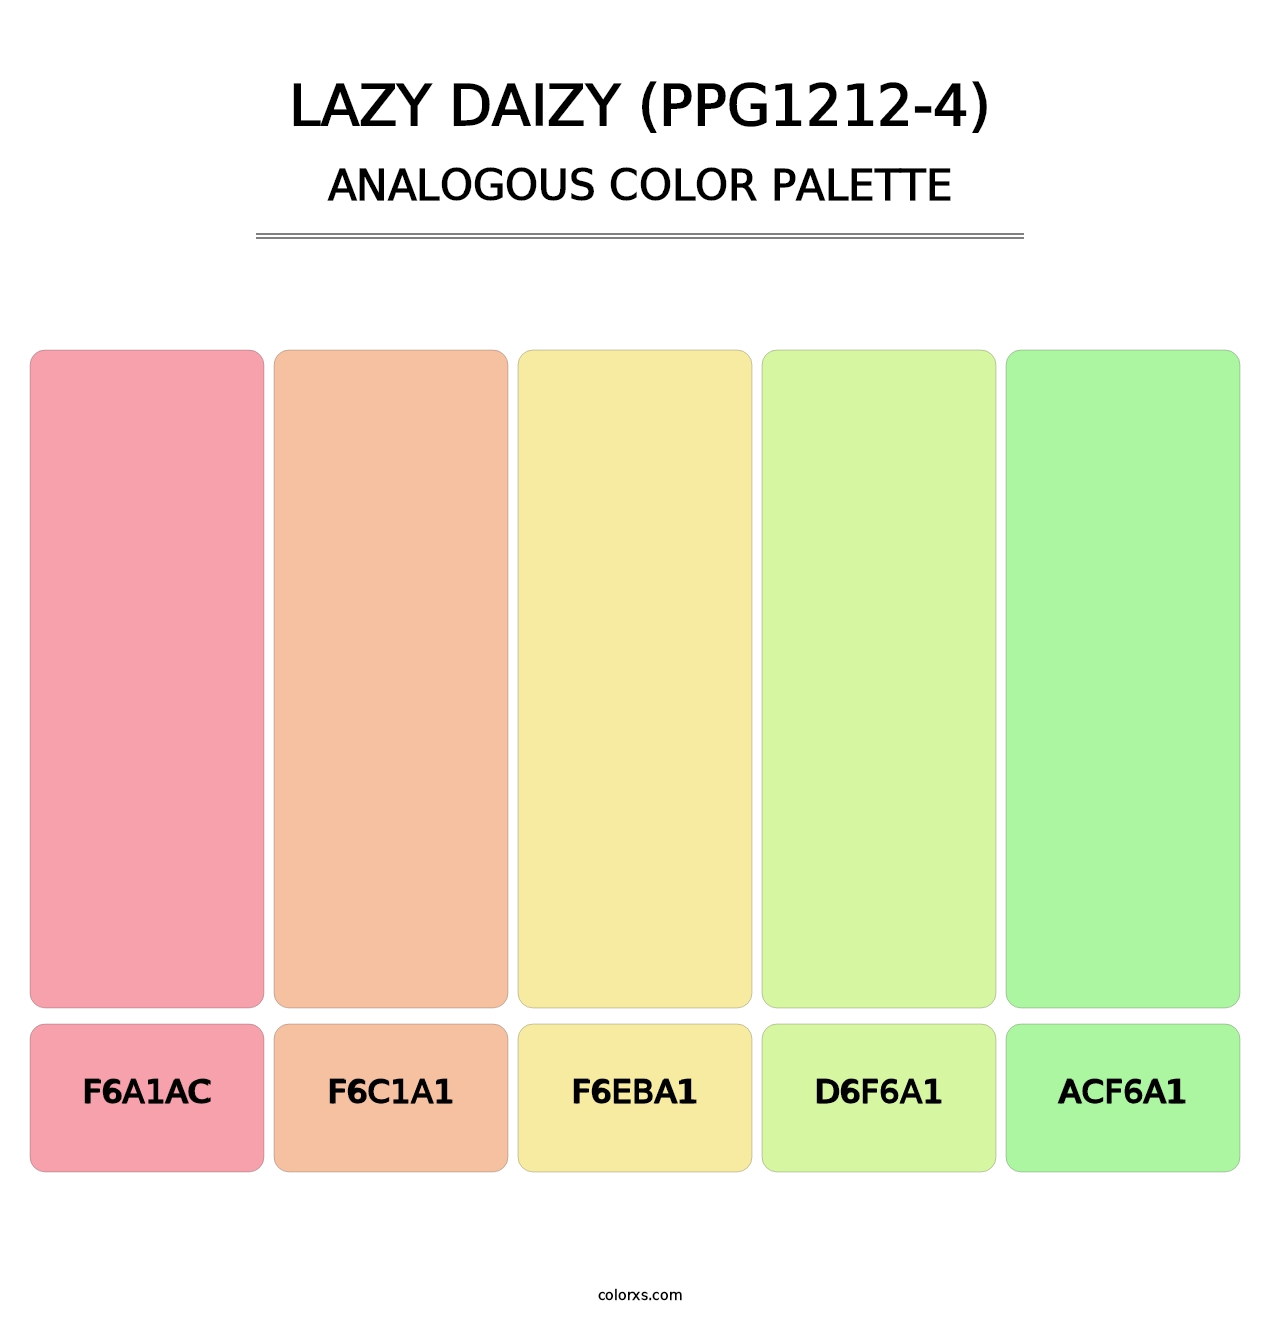 Lazy Daizy (PPG1212-4) - Analogous Color Palette